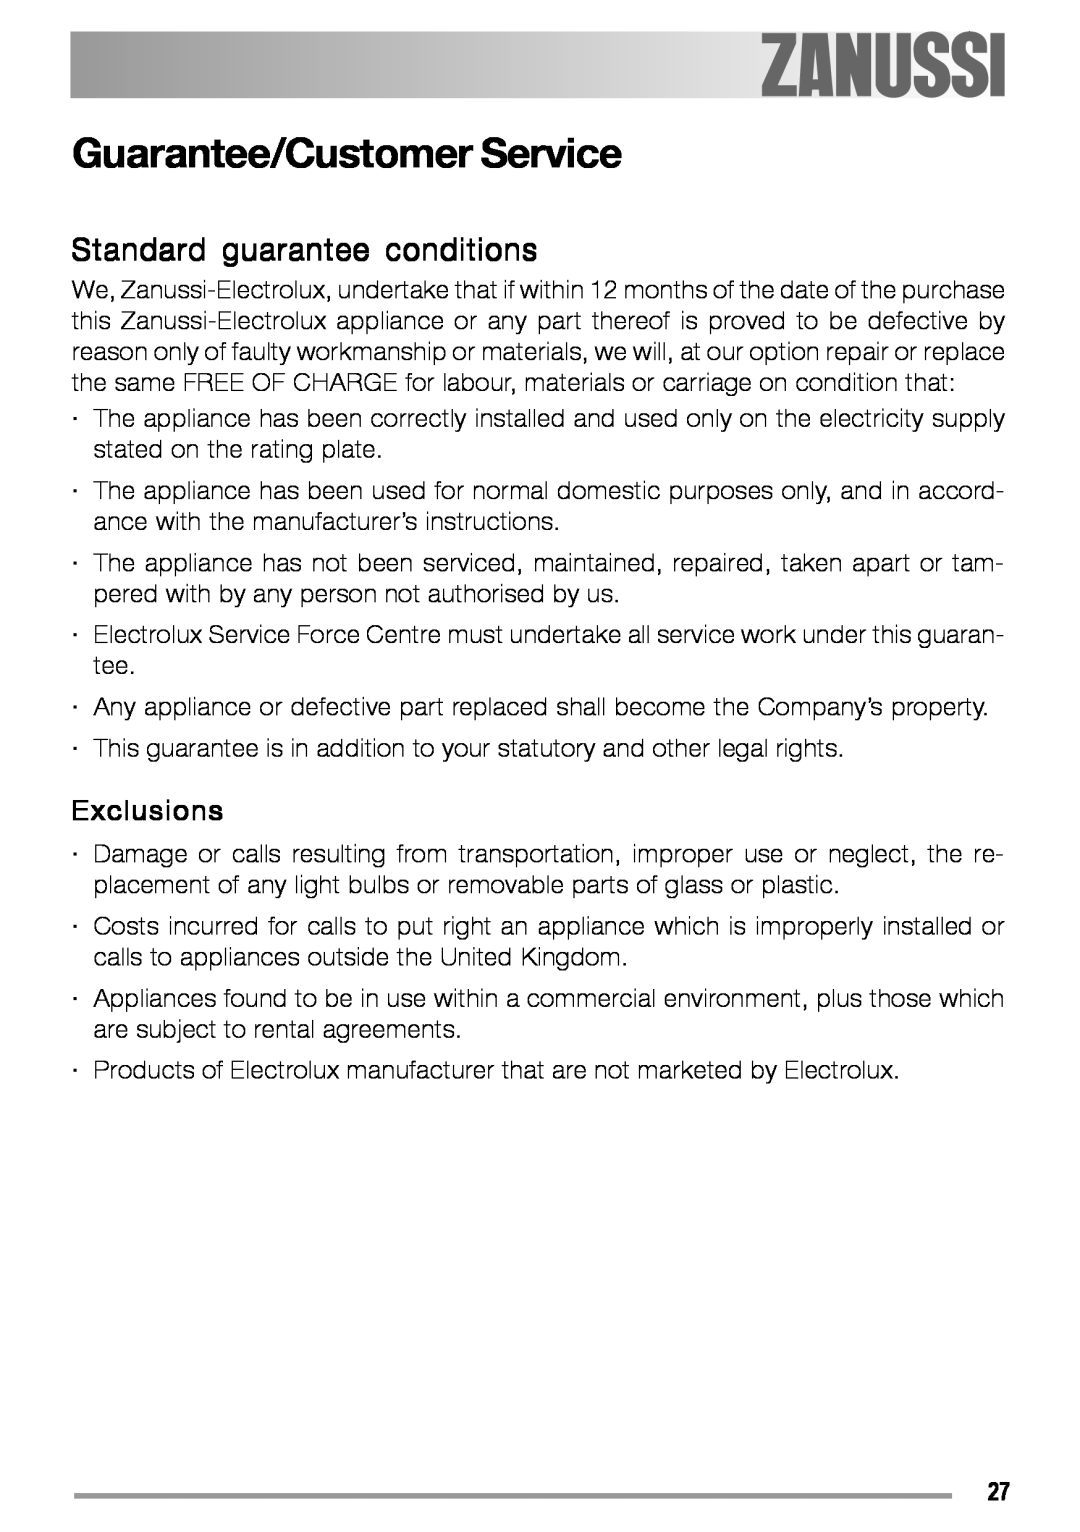 Zanussi ZGS 322 manual Standard guarantee conditions, Guarantee/Customer Service 